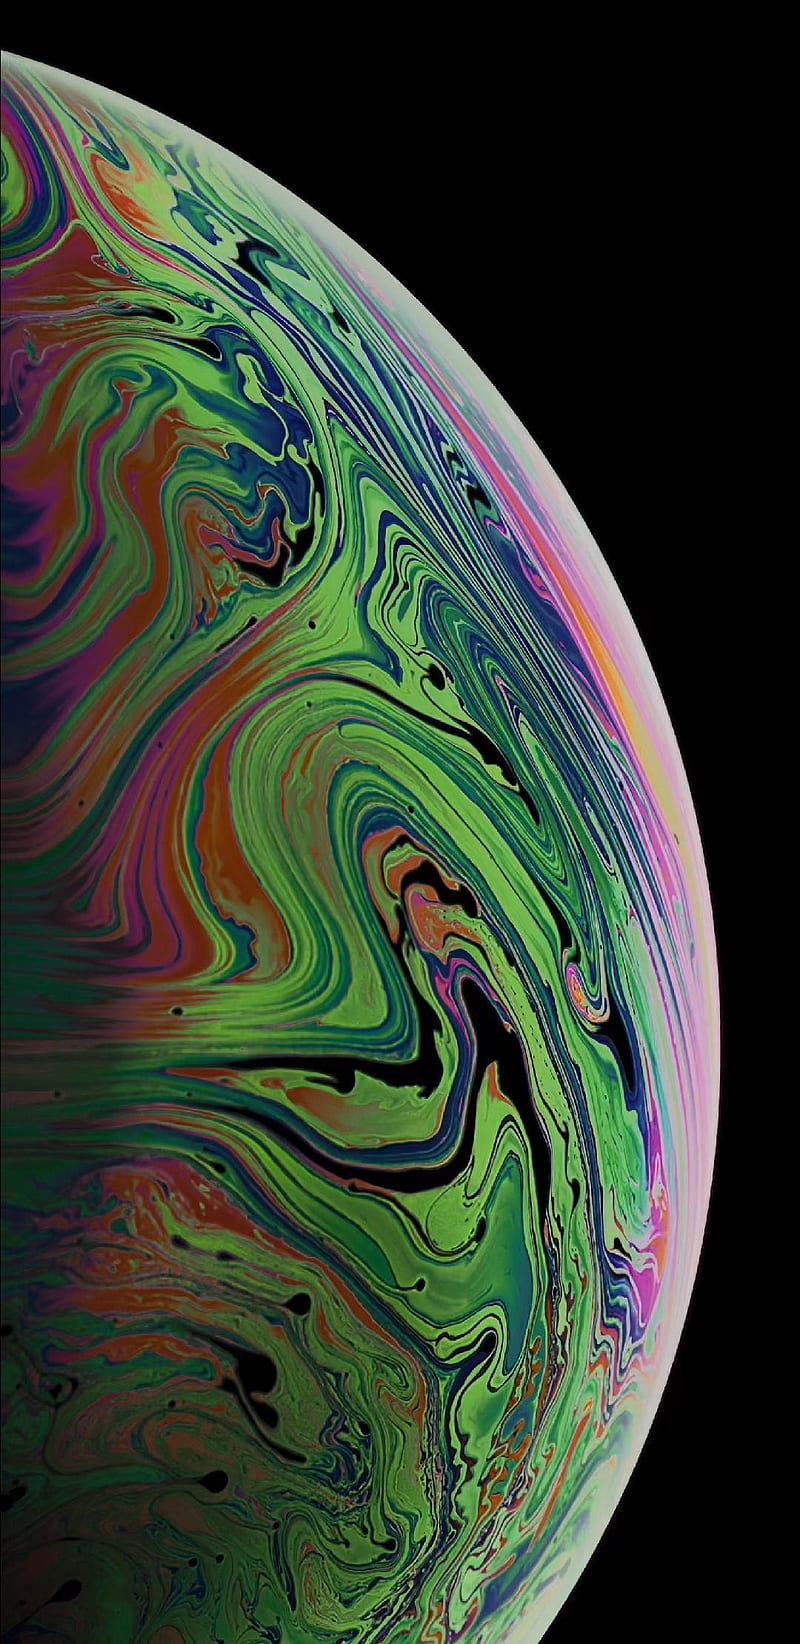 Wallpaper iPhone X  Apple logo rainbow 3  Iphone lockscreen wallpaper  Apple iphone wallpaper hd Apple wallpaper iphone